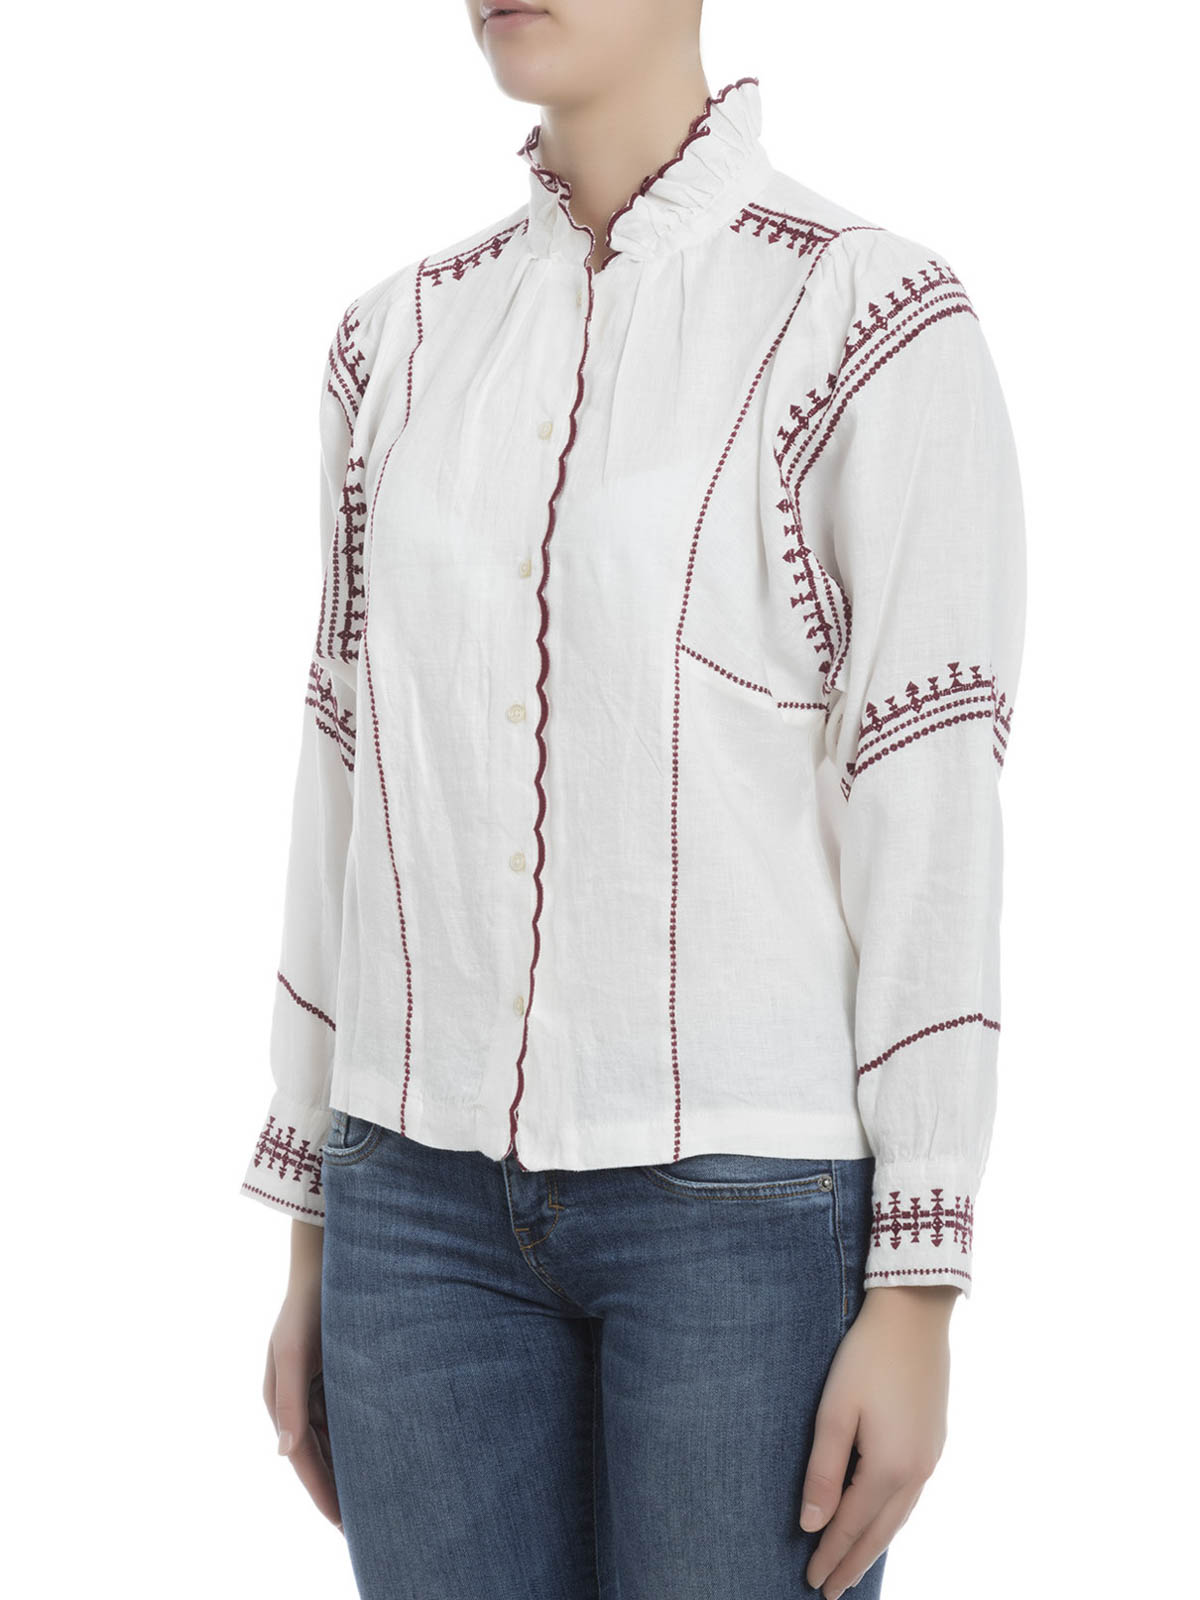 Arthur spand Beskrive Shirts isabel marant etoile - Delphine embroidered linen blouse -  HT093217P024E23EC